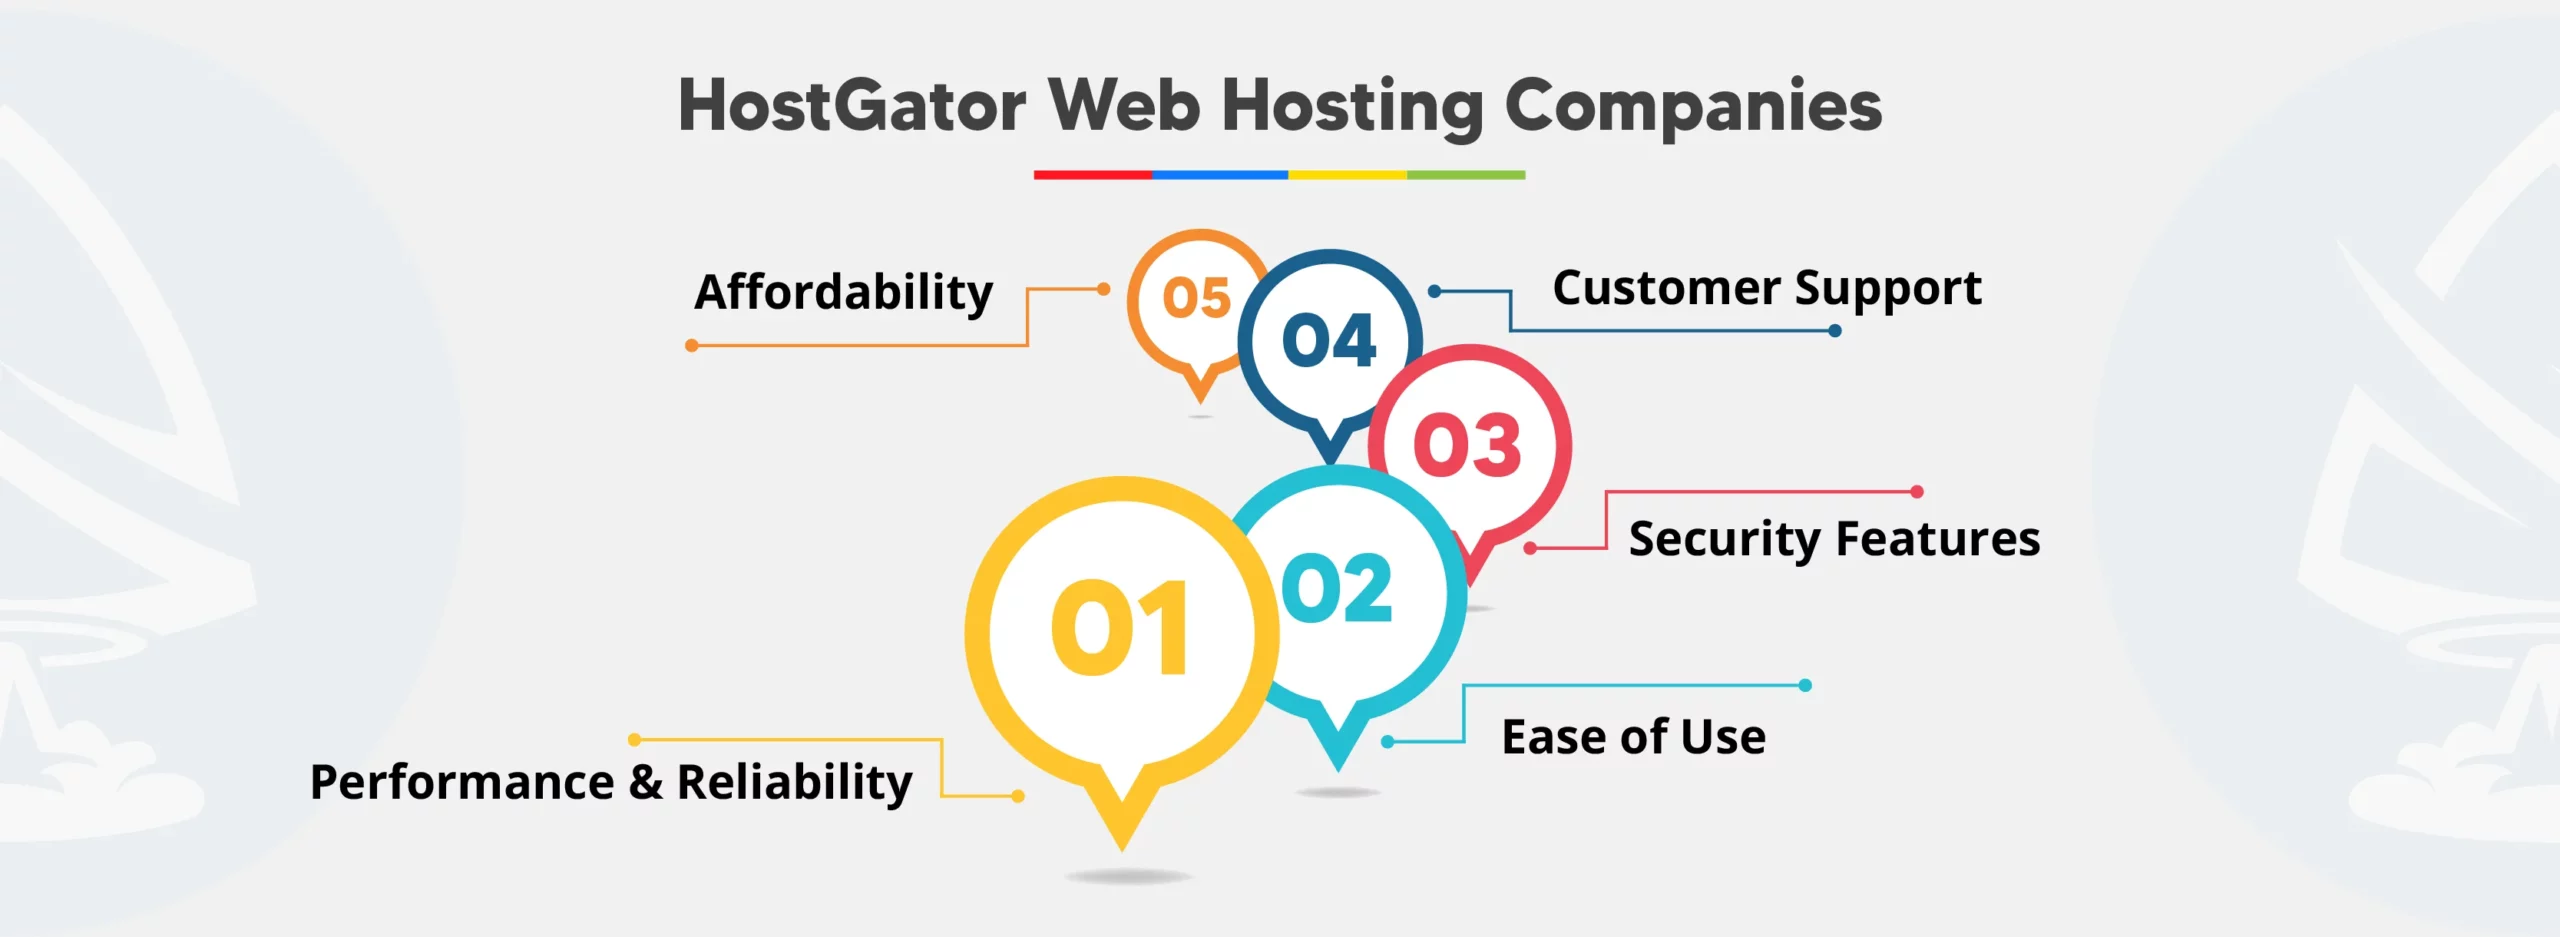 HostGator Web Hosting Companies